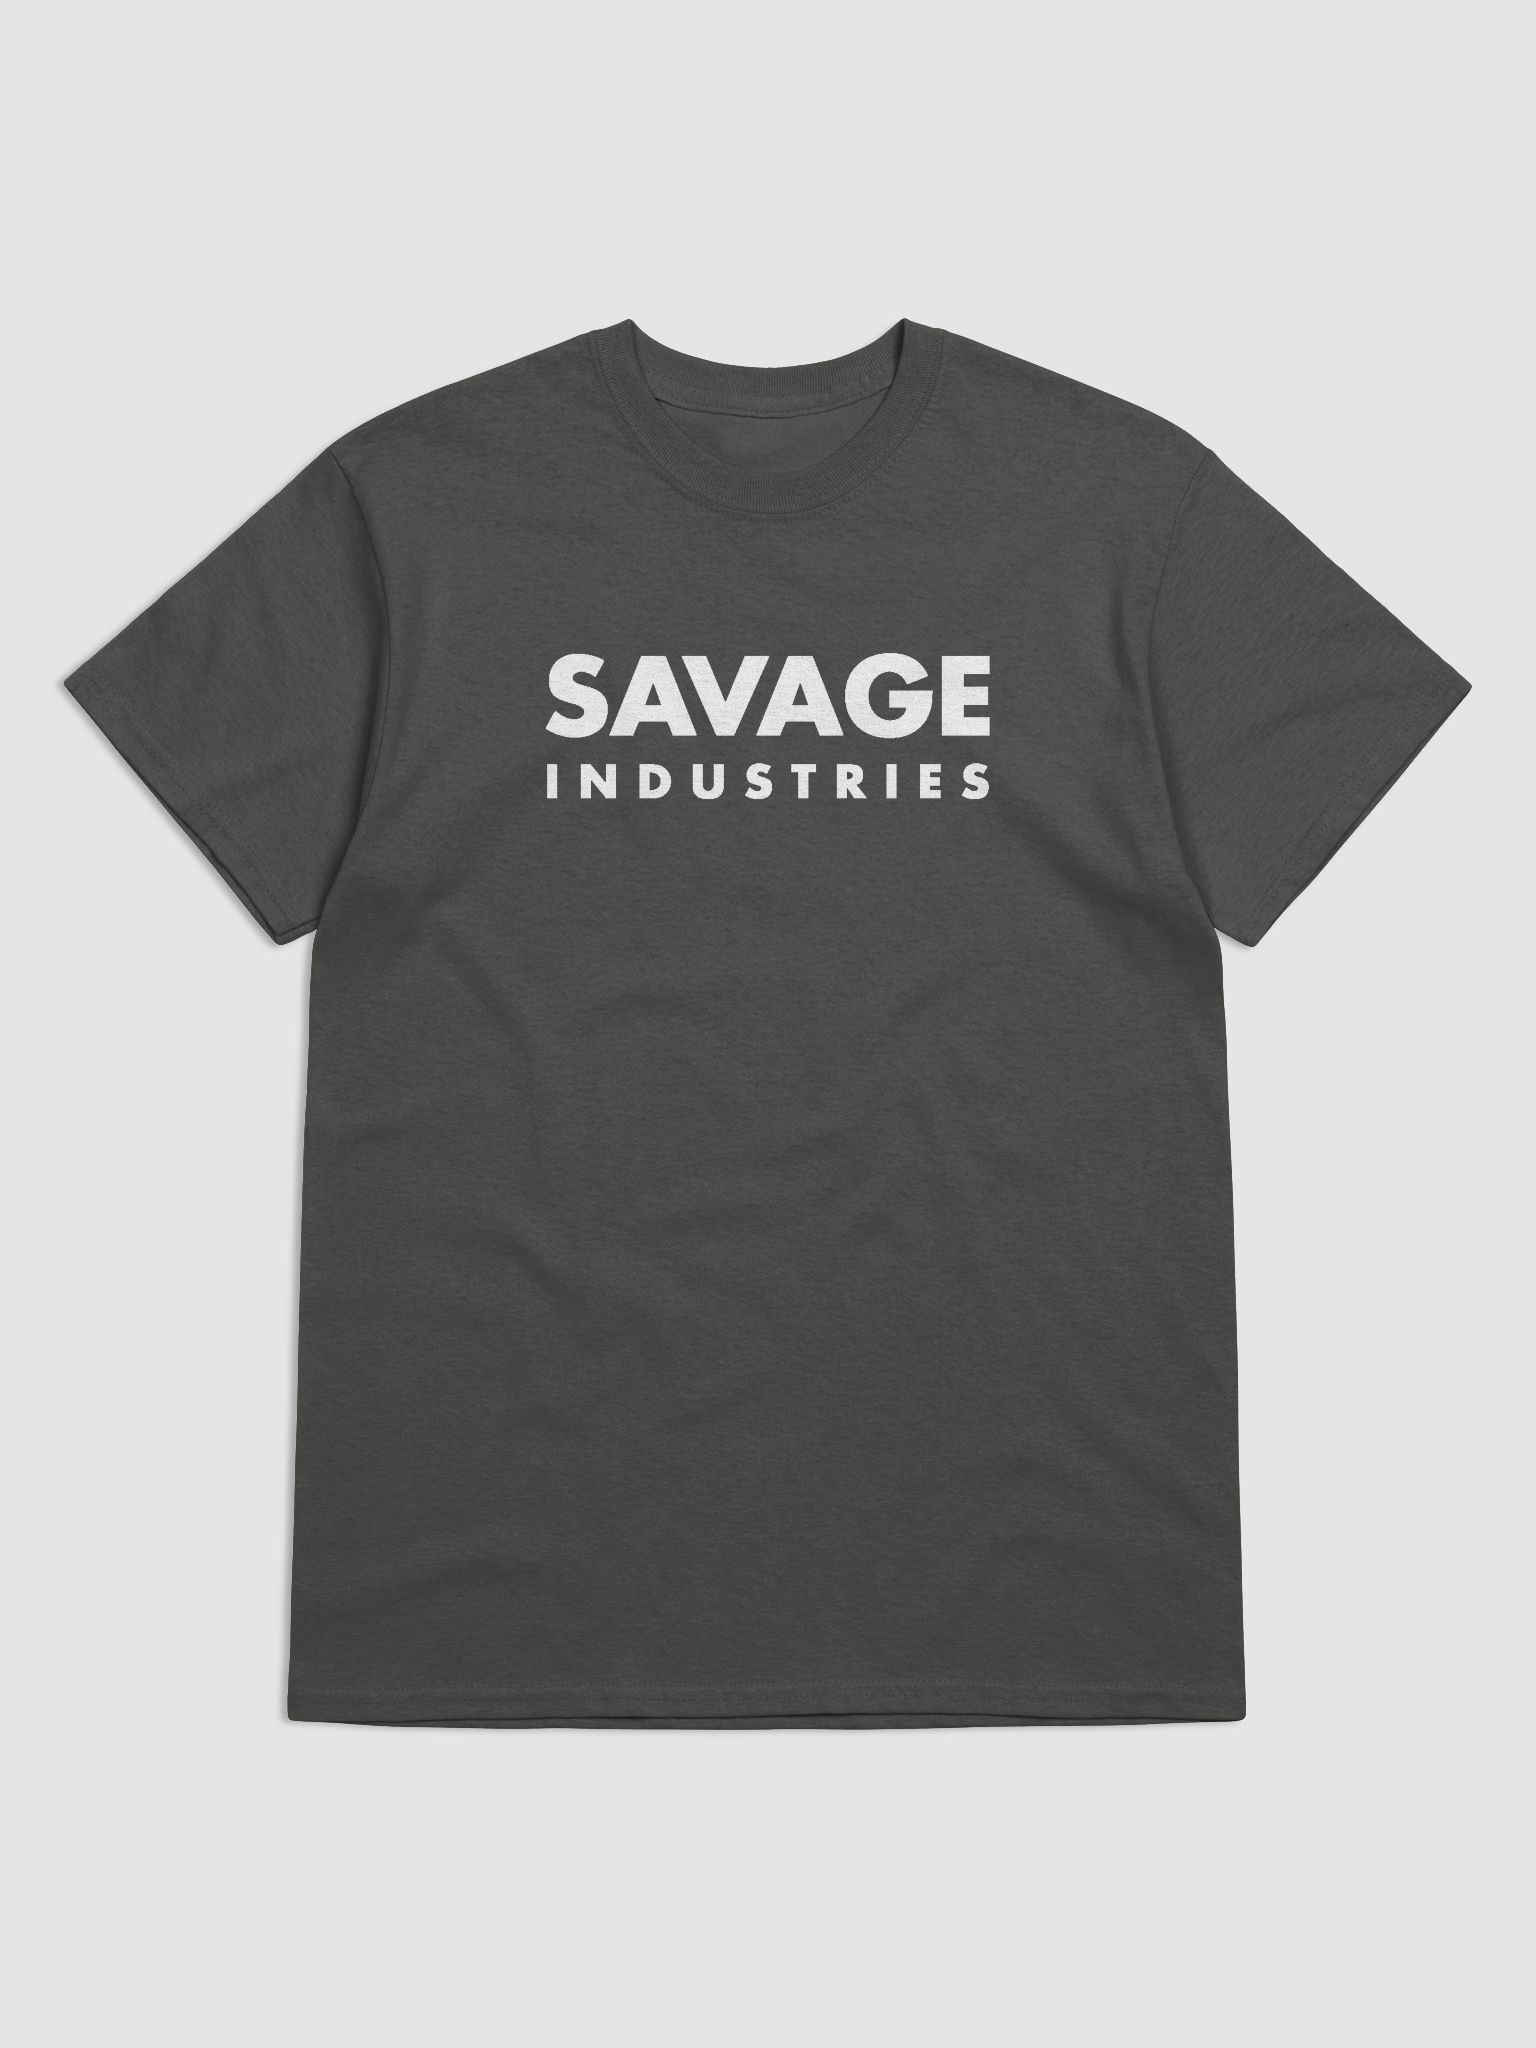 Savage Industries - White logo (Classic Tee)